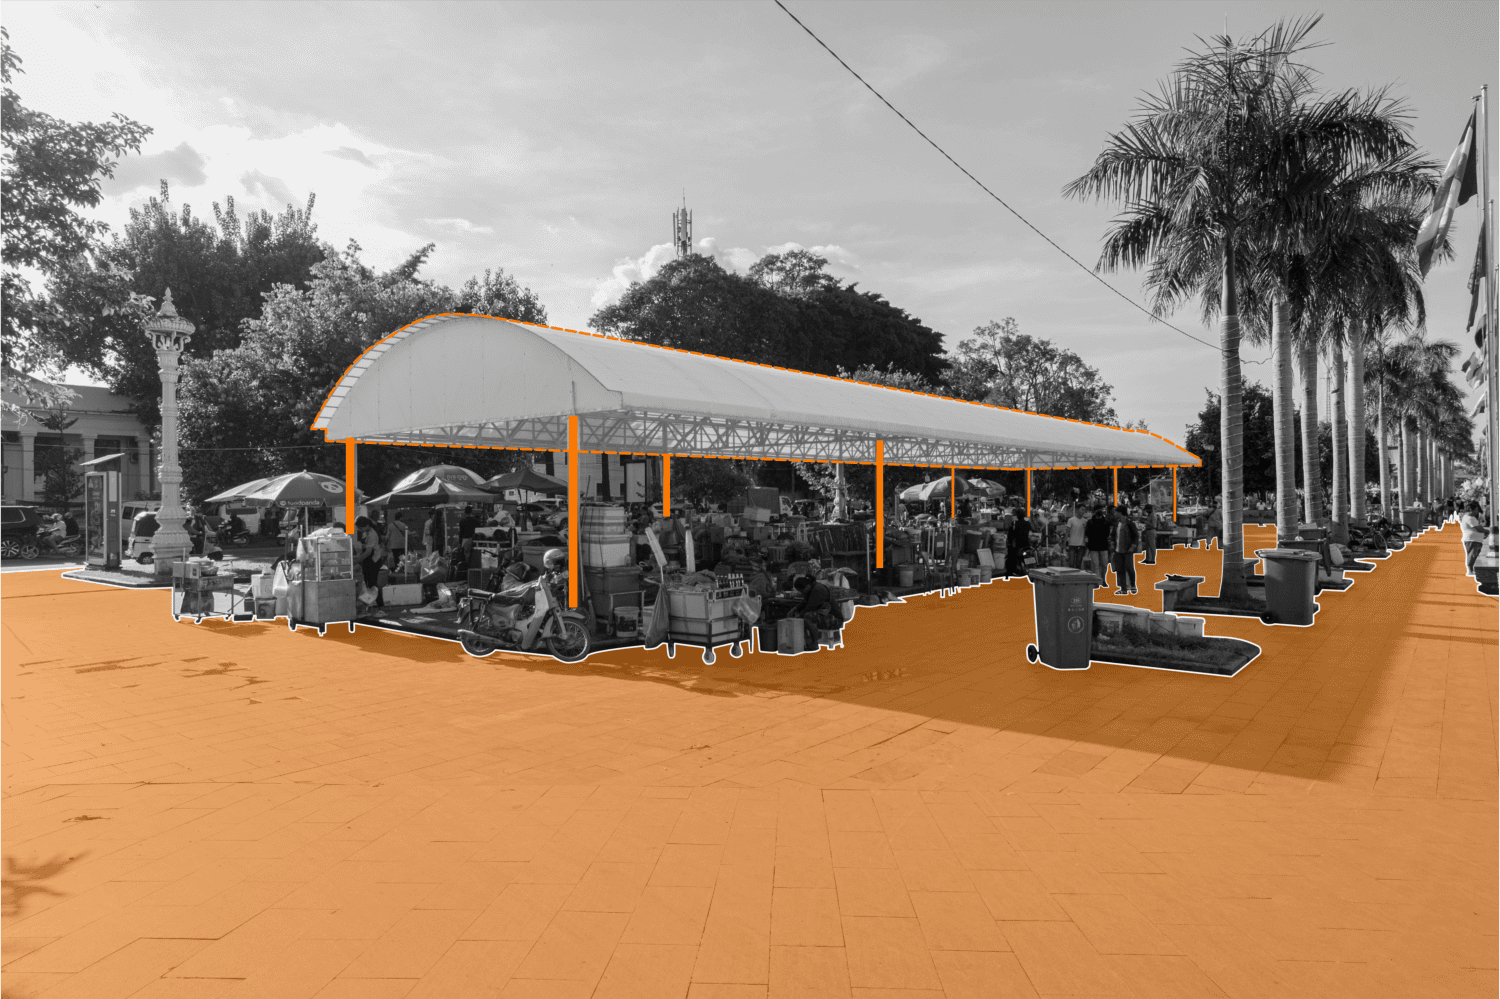 An illustration of a riverside "vendor hub." (Nakvathnak Chanrith)